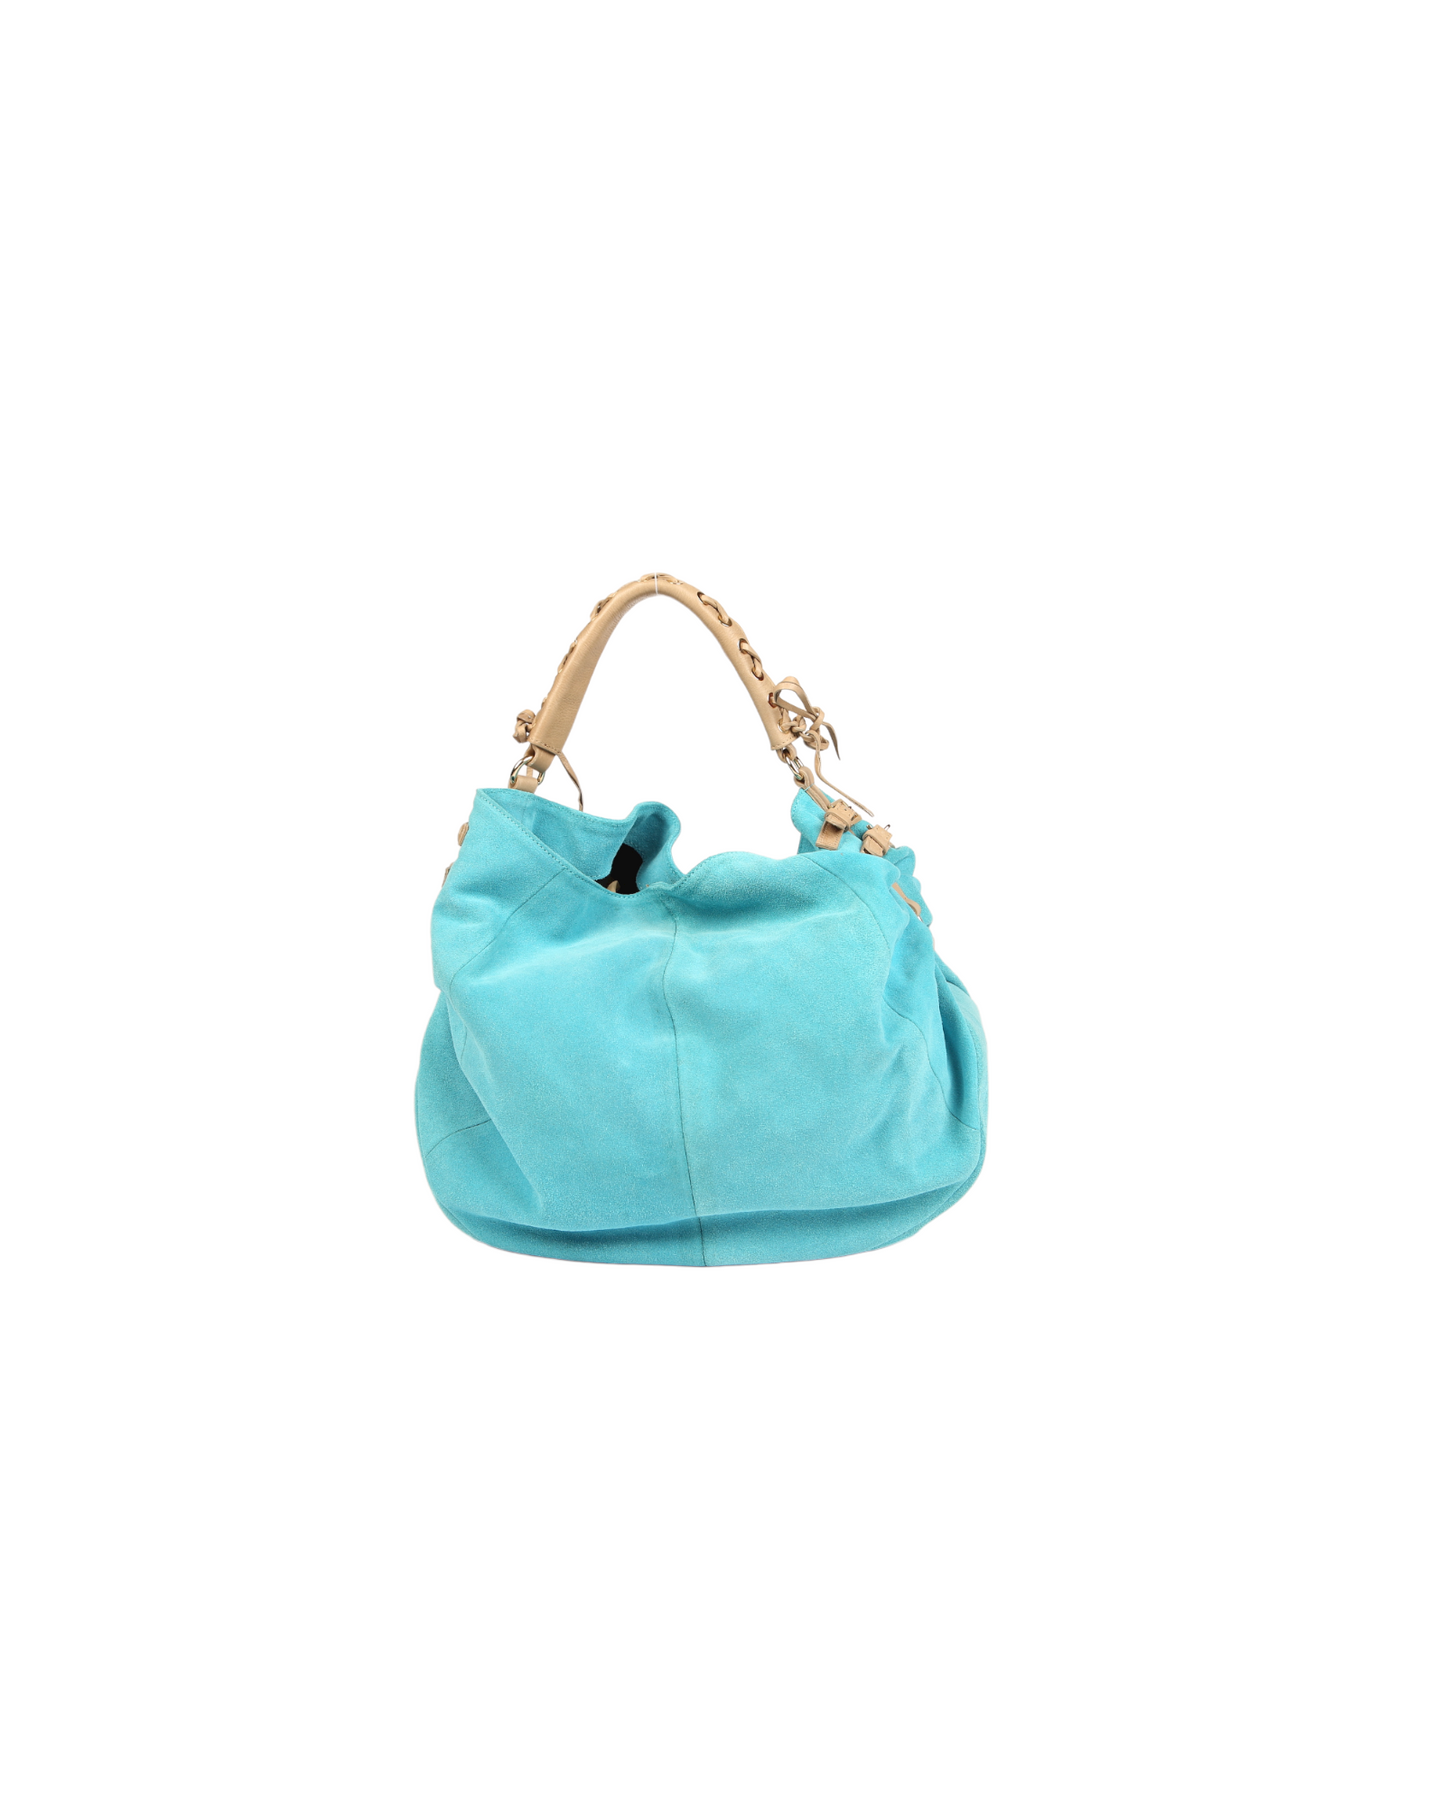 Turquoise bag